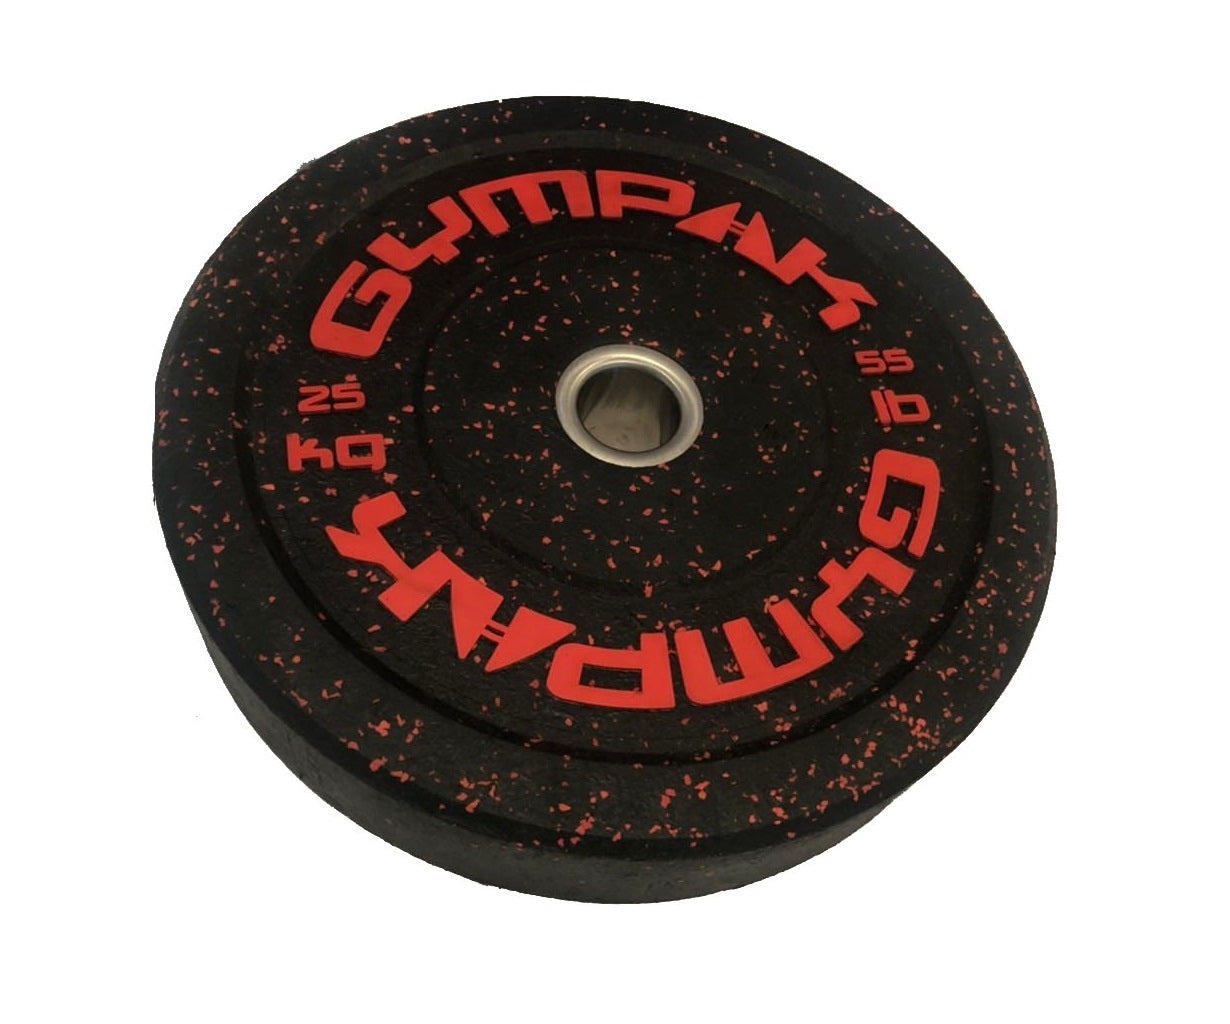 Crumb Bumper Olympic Plate - Red - 55 lb